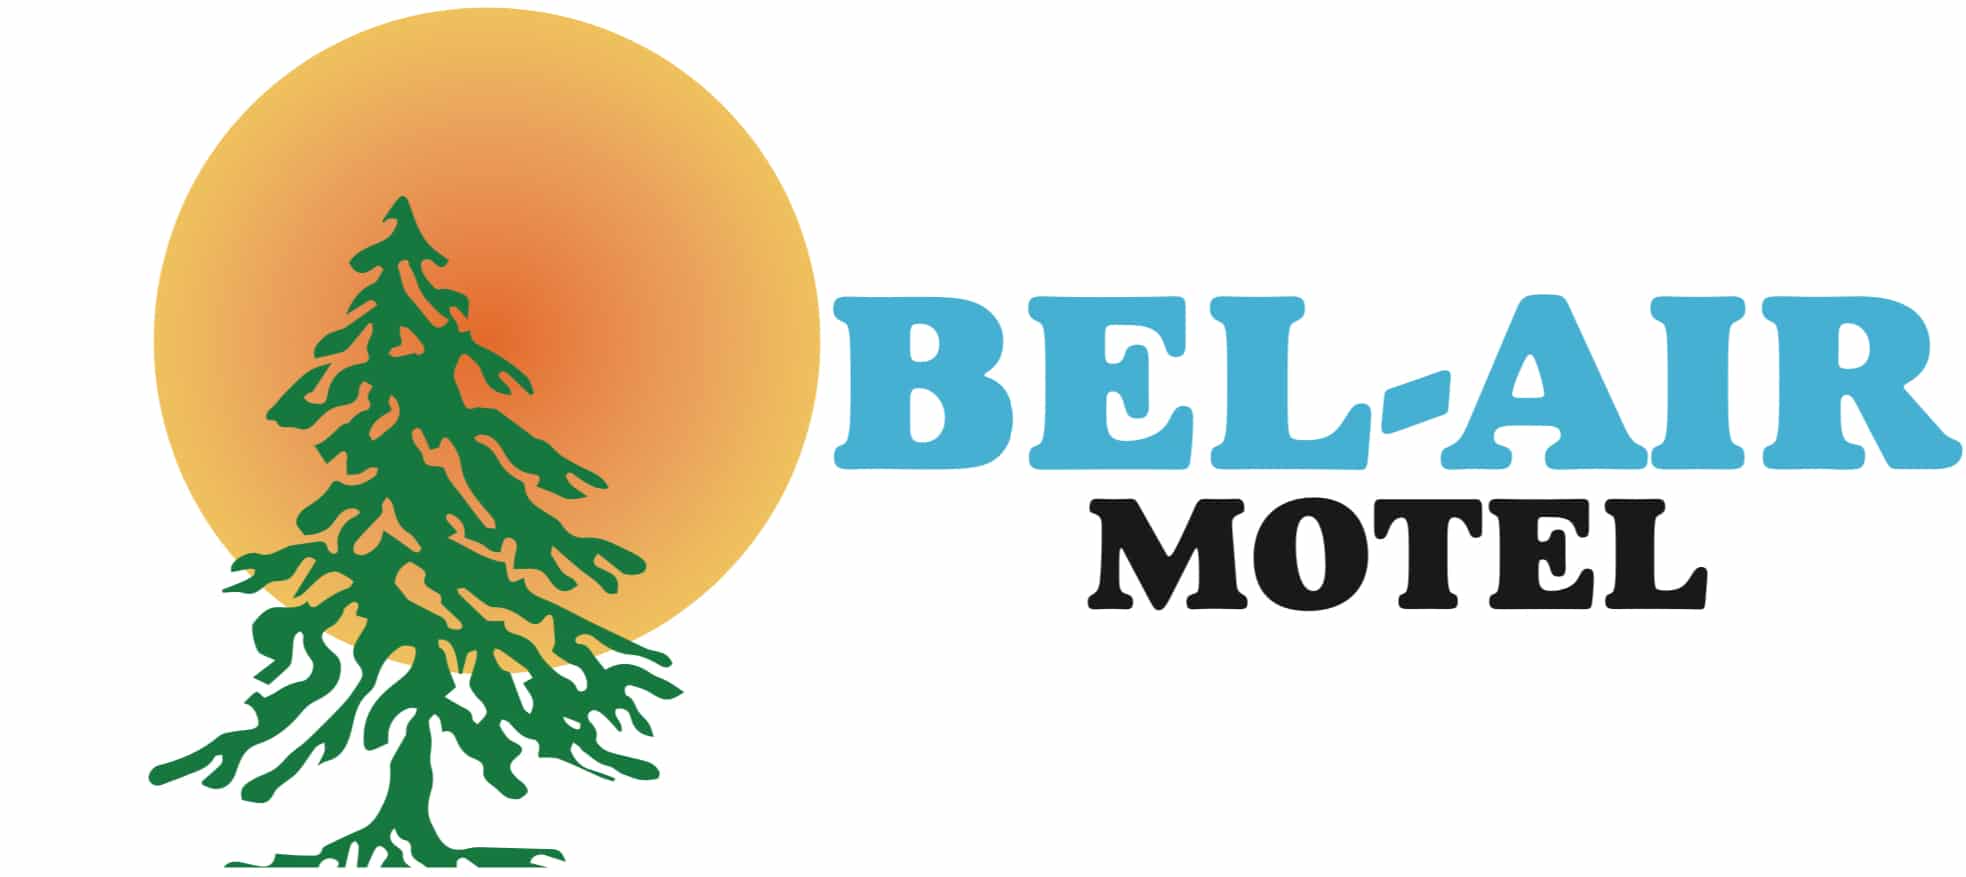 Bel Air Motel Logo